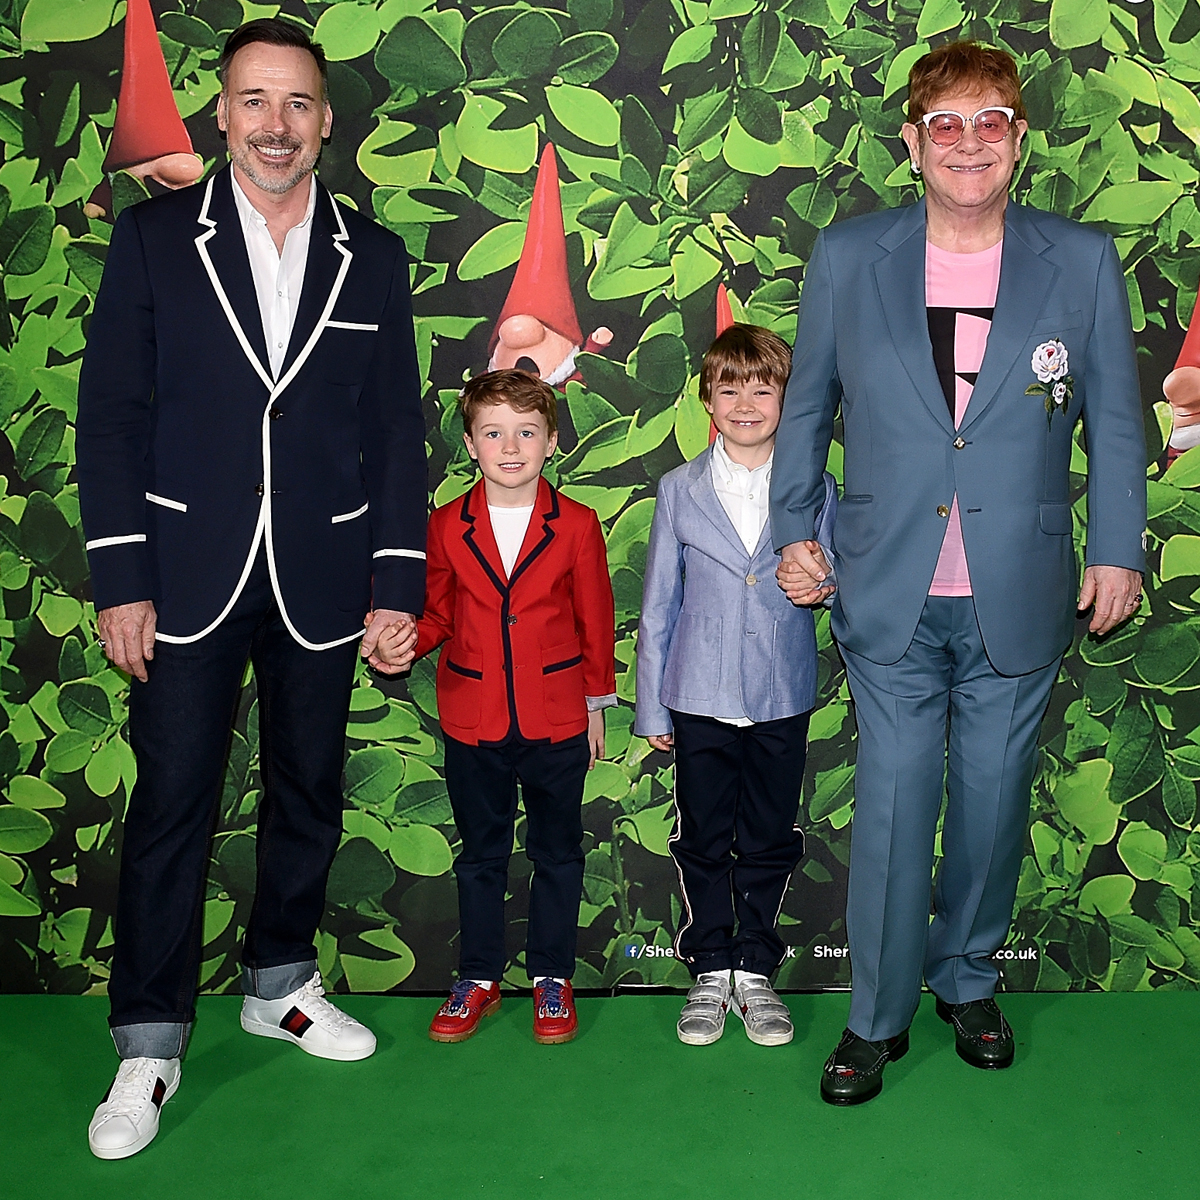 Elton John wedding to David Furnish - Photos & Celebrity Guests